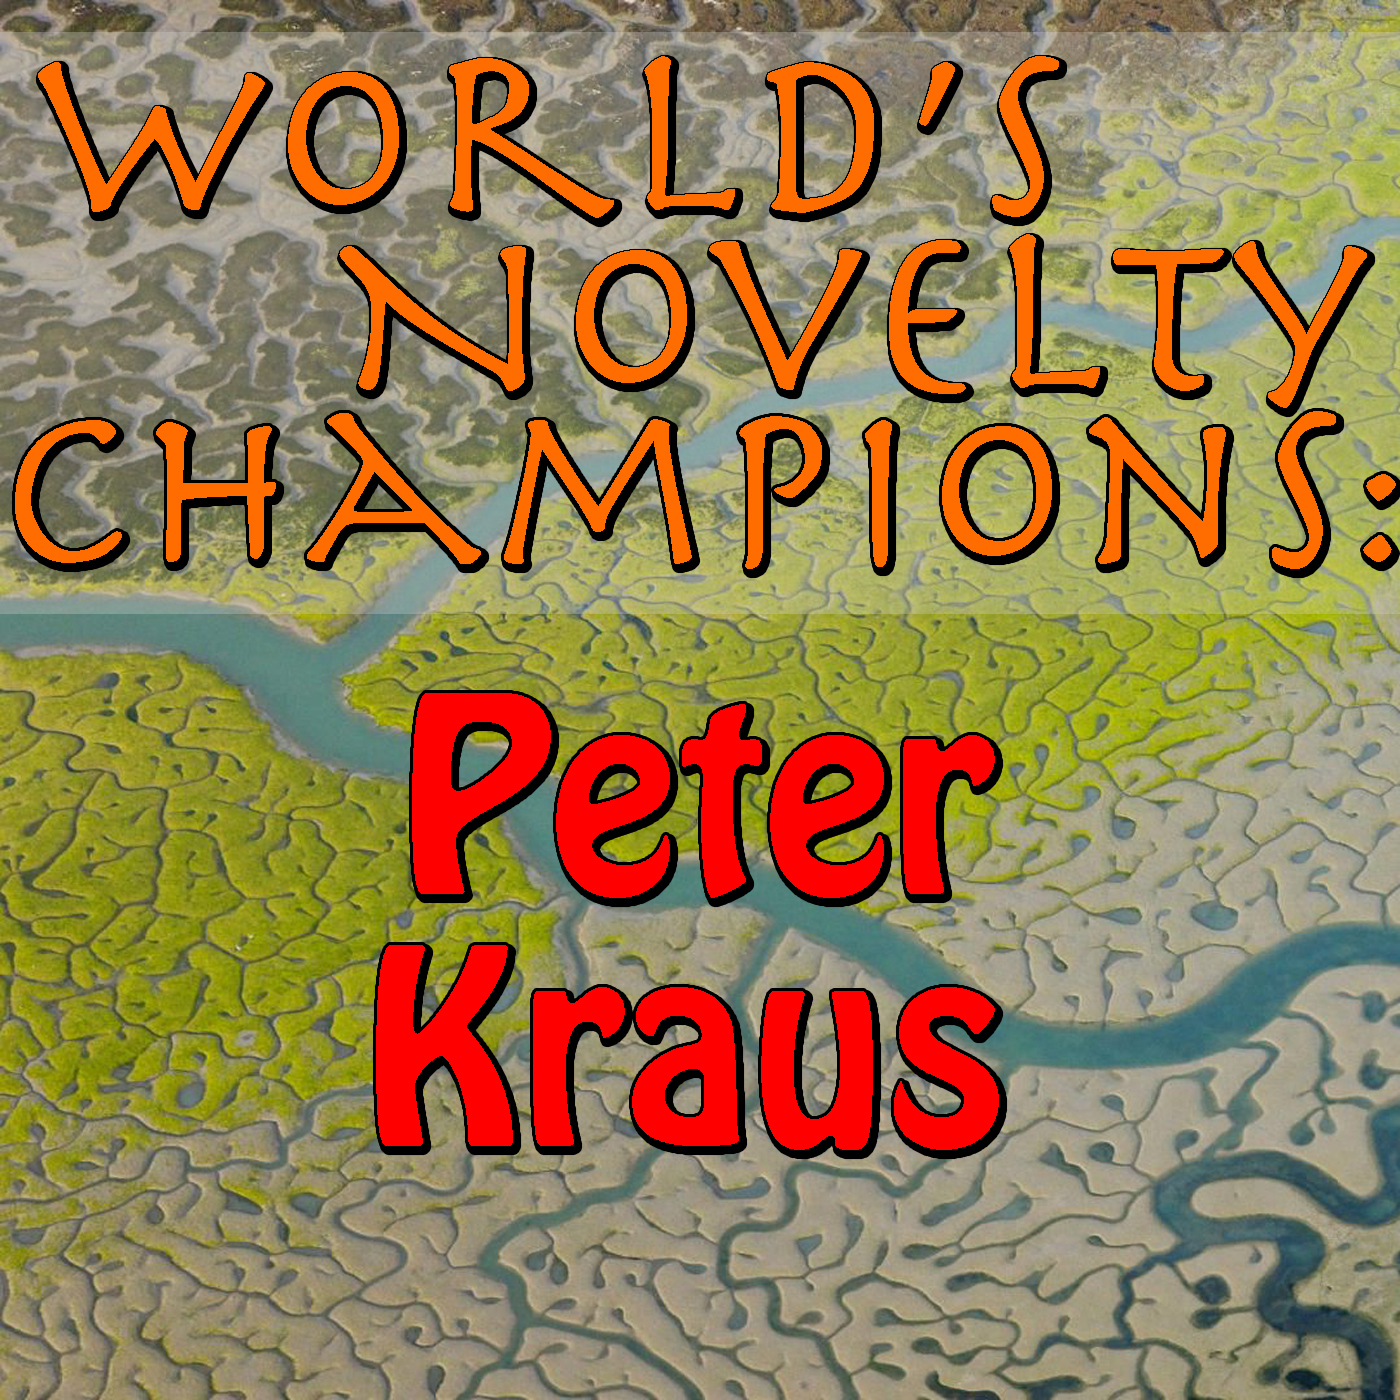 World's Novelty Champions: Peter Kraus